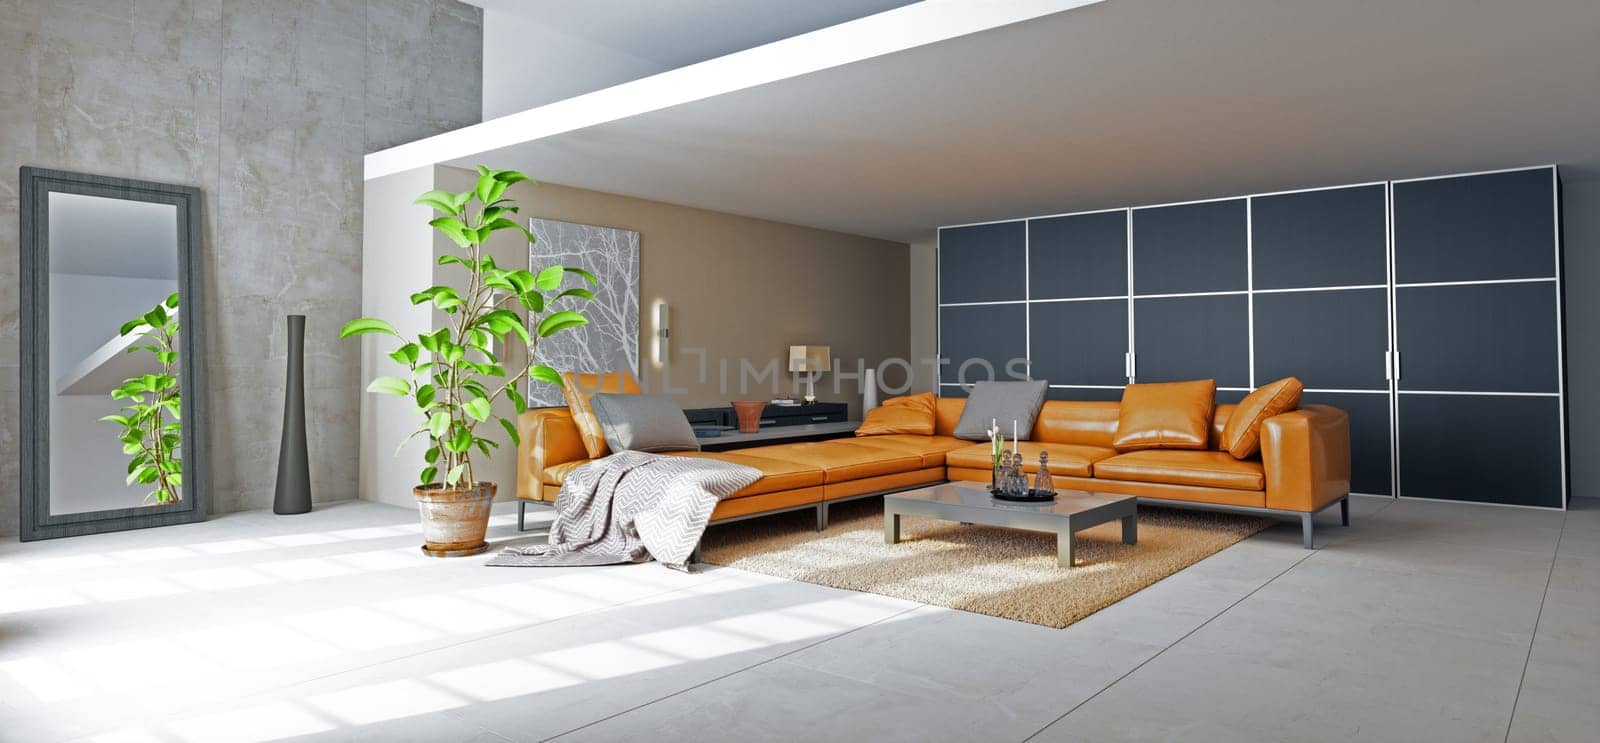 3D illustration of a modern apartment interior.